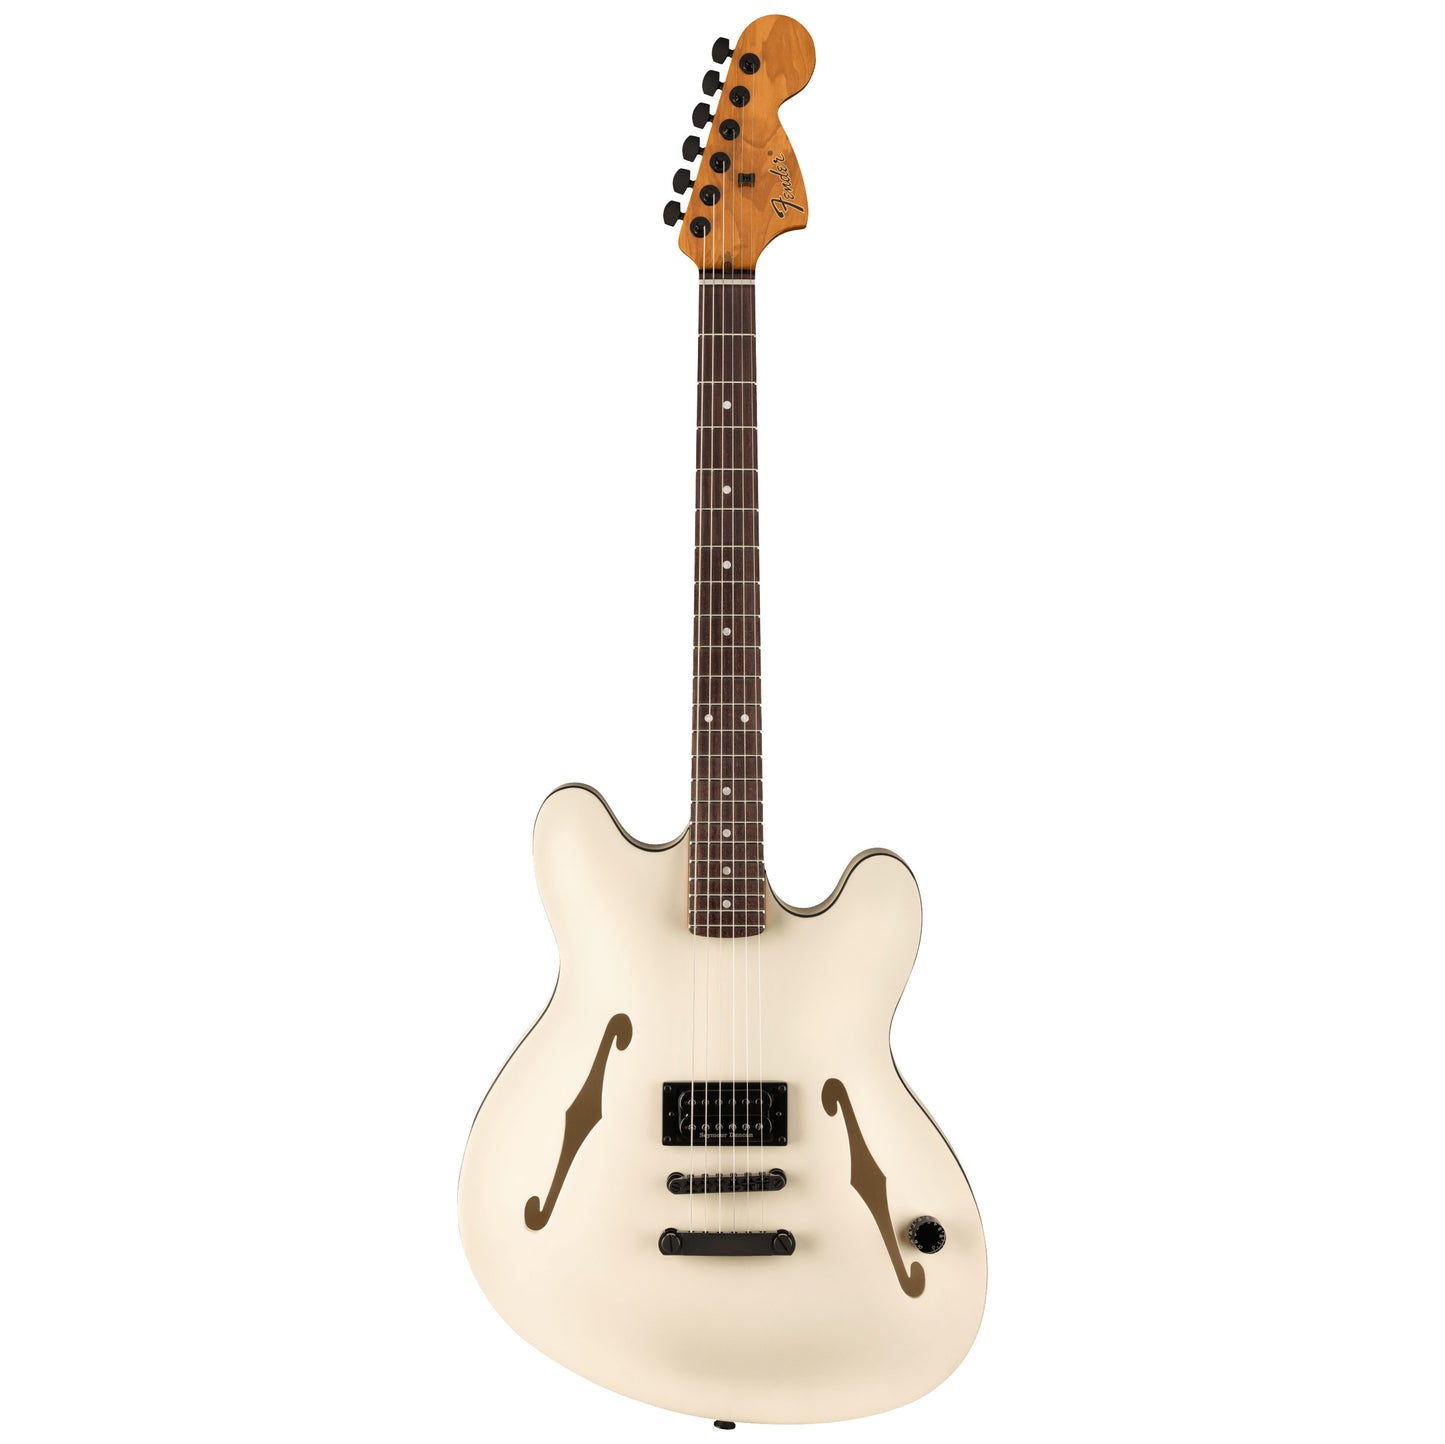 Fender Tom DeLonge Starcaster Semi-Hollow Electric Guitar - Satin Olympic White